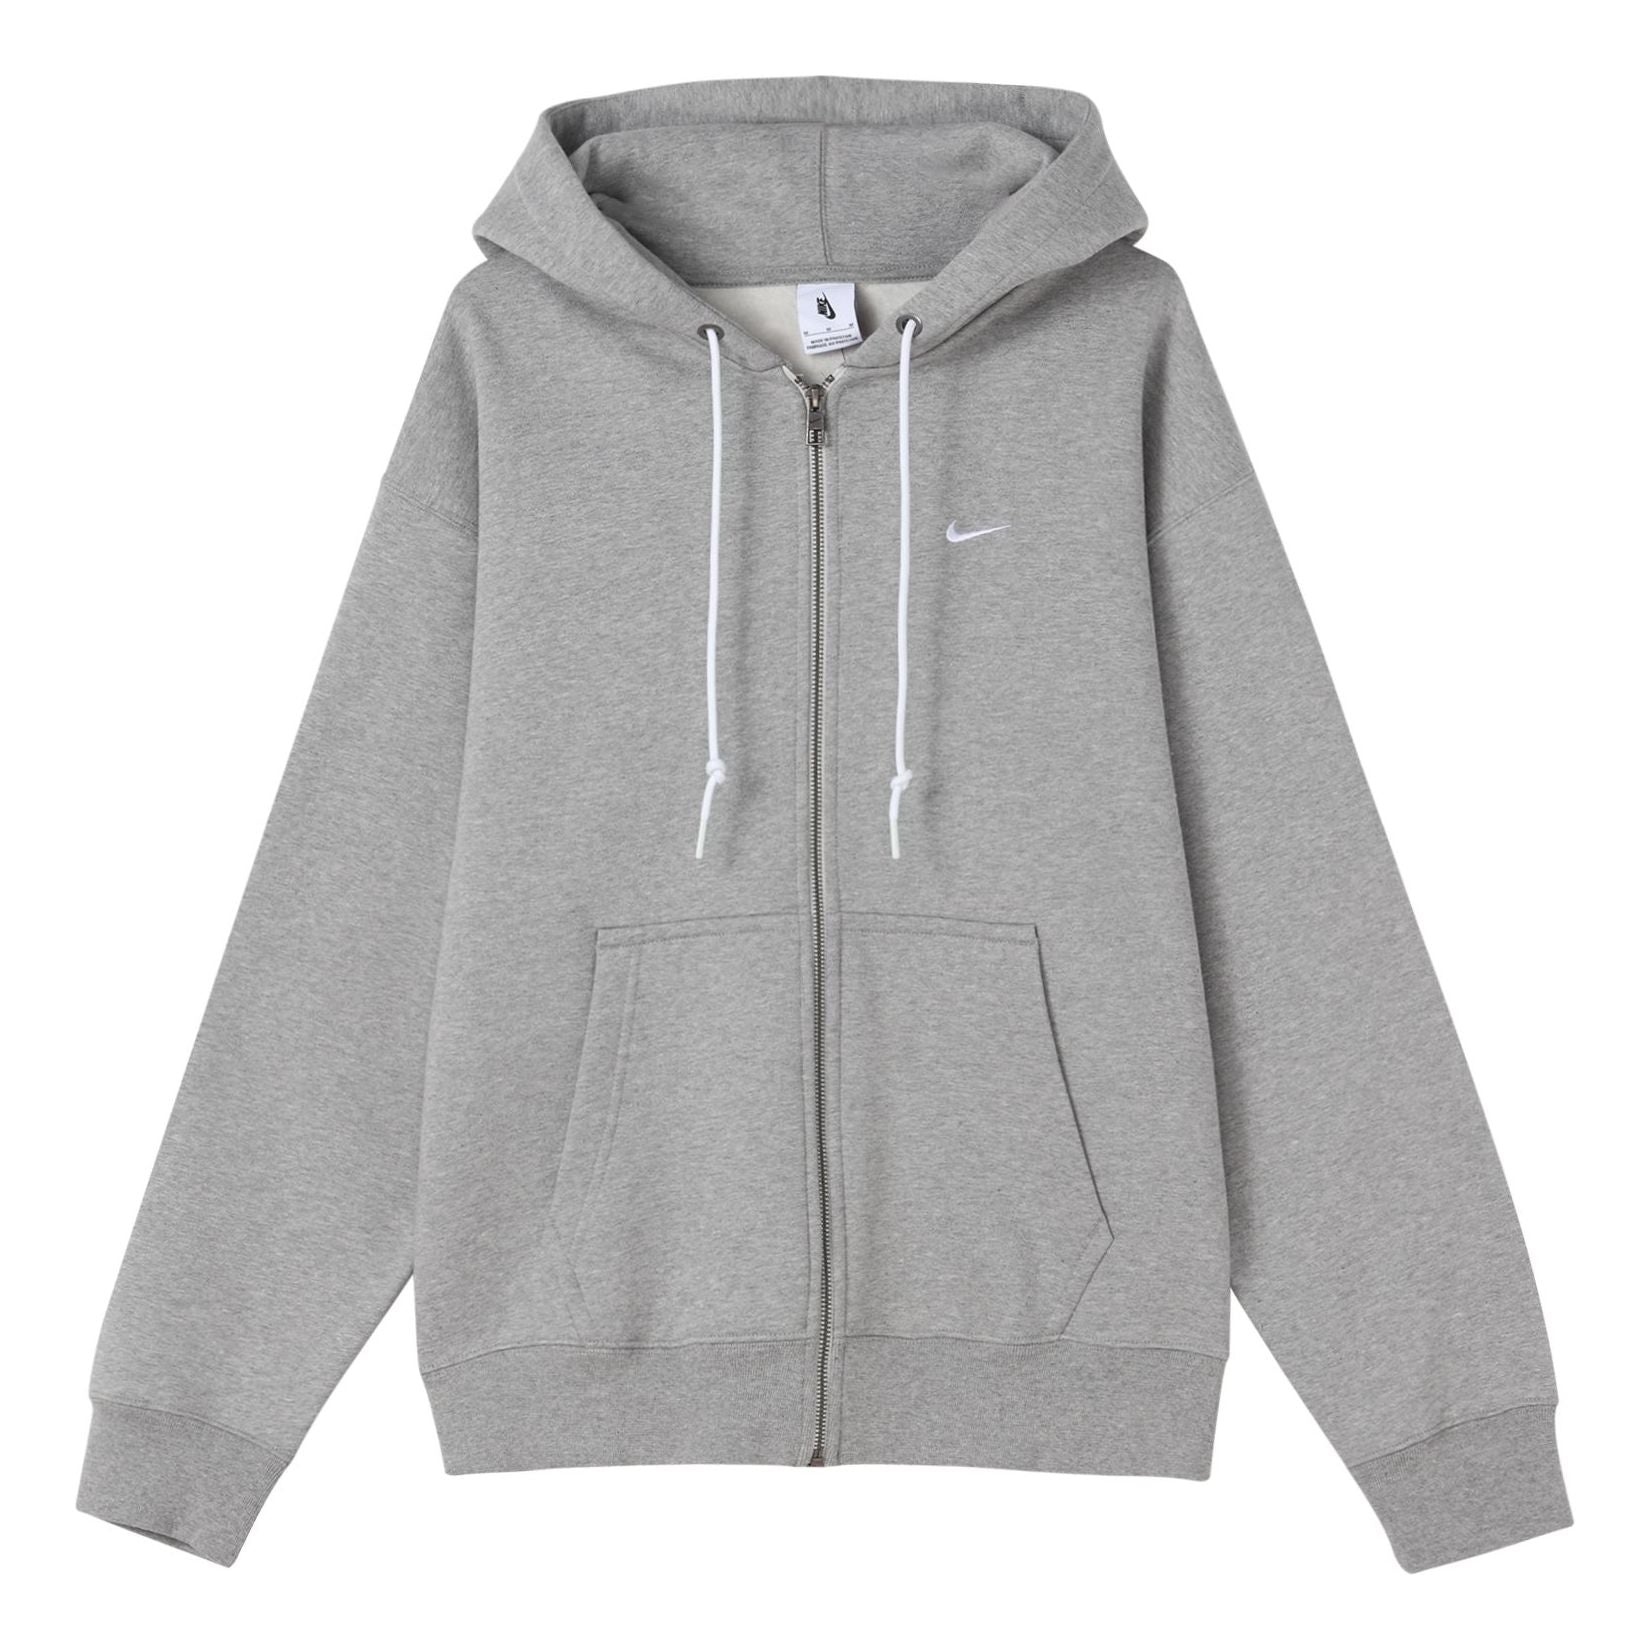 Nike embroidered logo hooded jacket 'Grey' DR0404-063 - 1